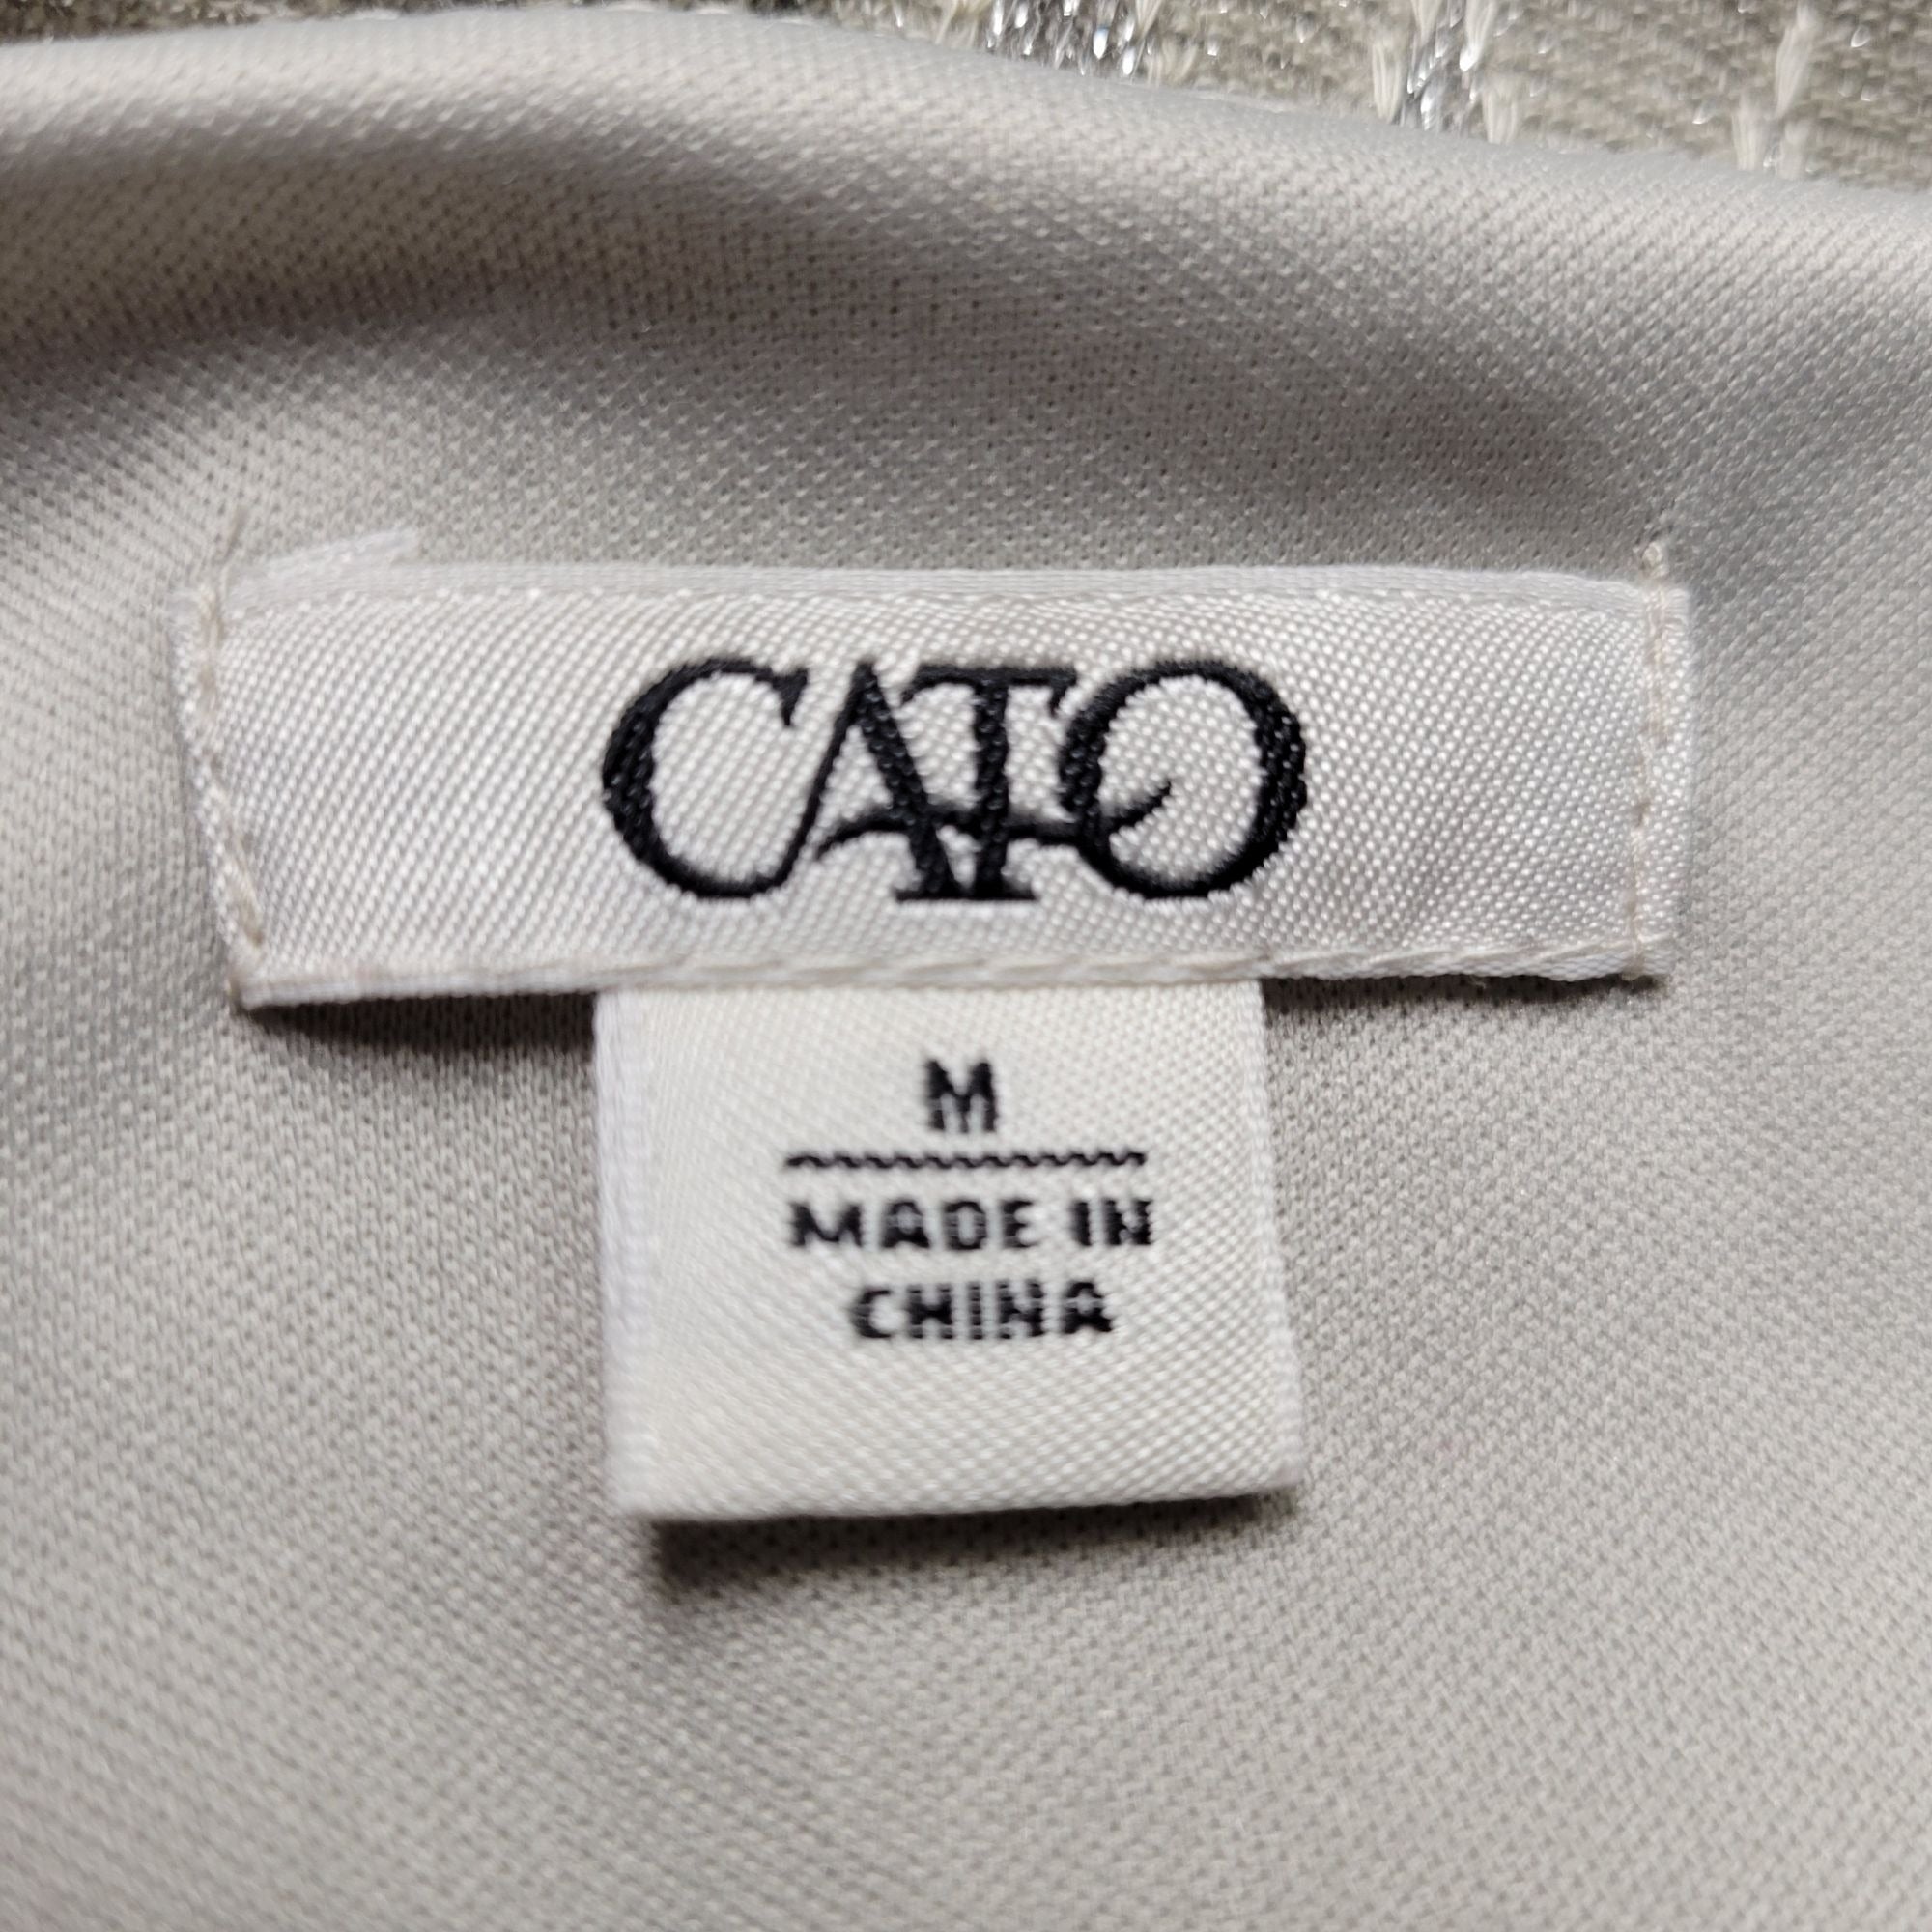 CATO Gray and Silver Metallic Tank Top Sweater, Size Medium